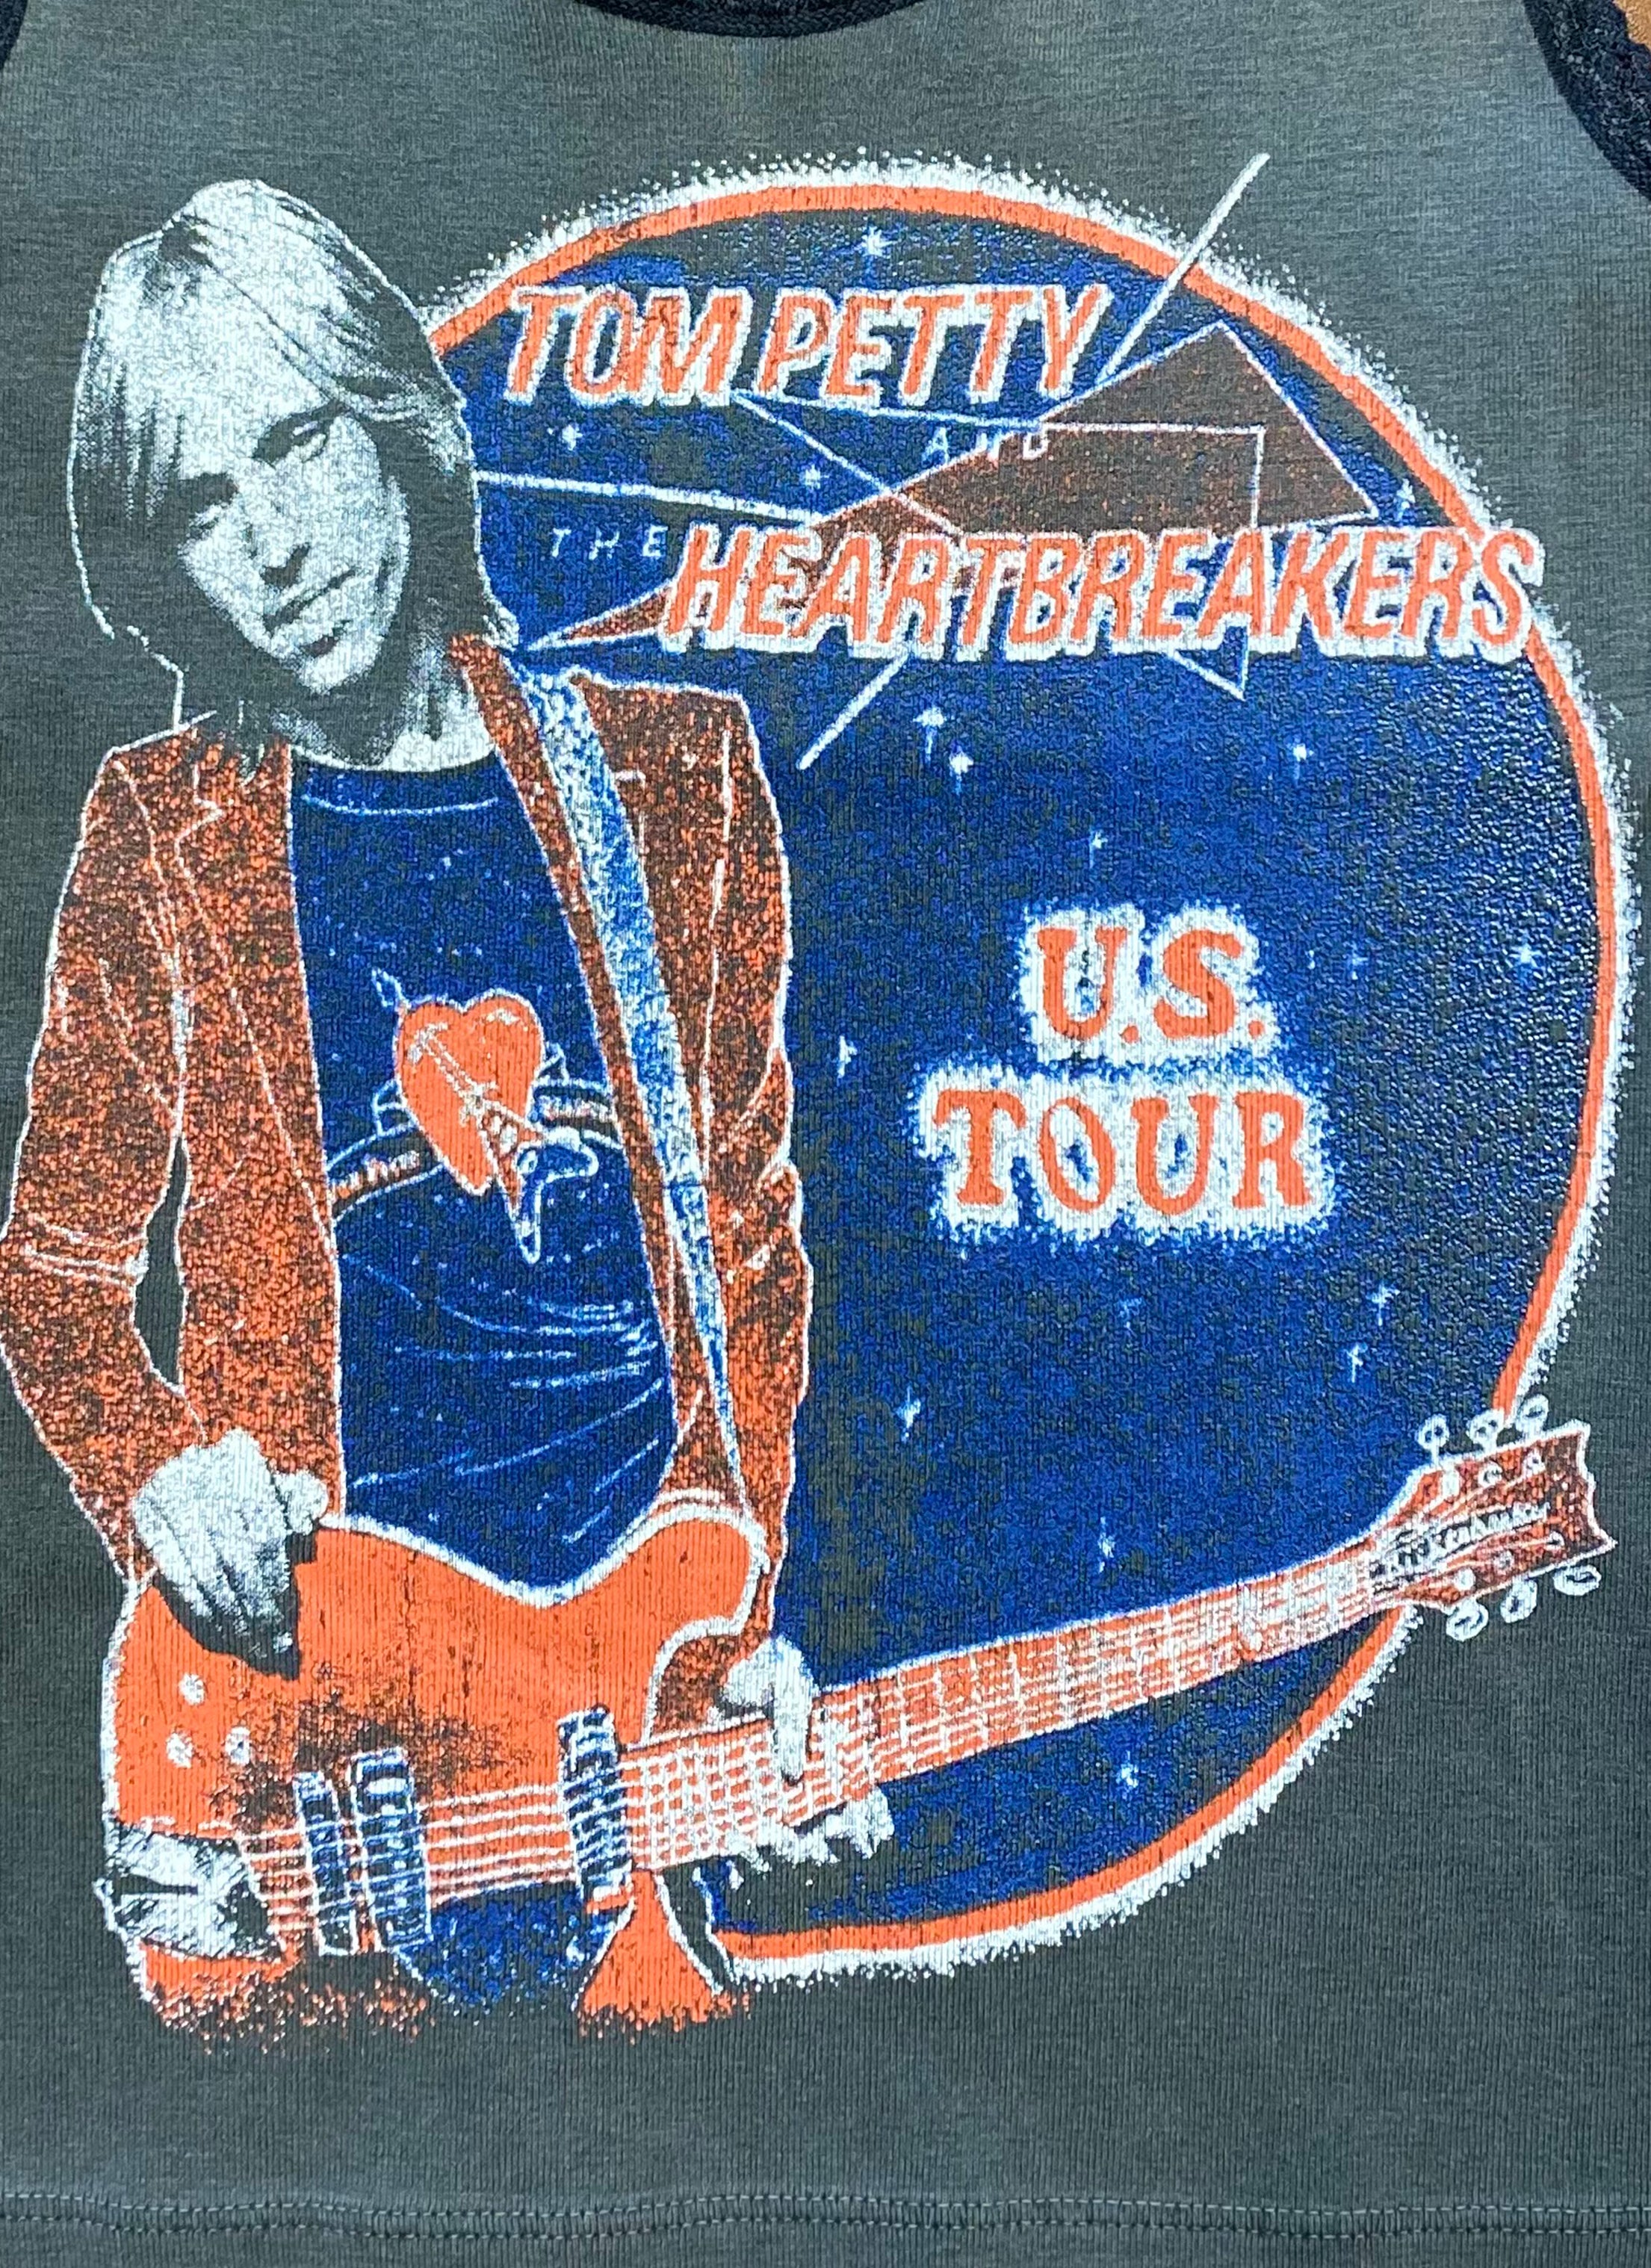 Tom Petty US Tour Lace Tank